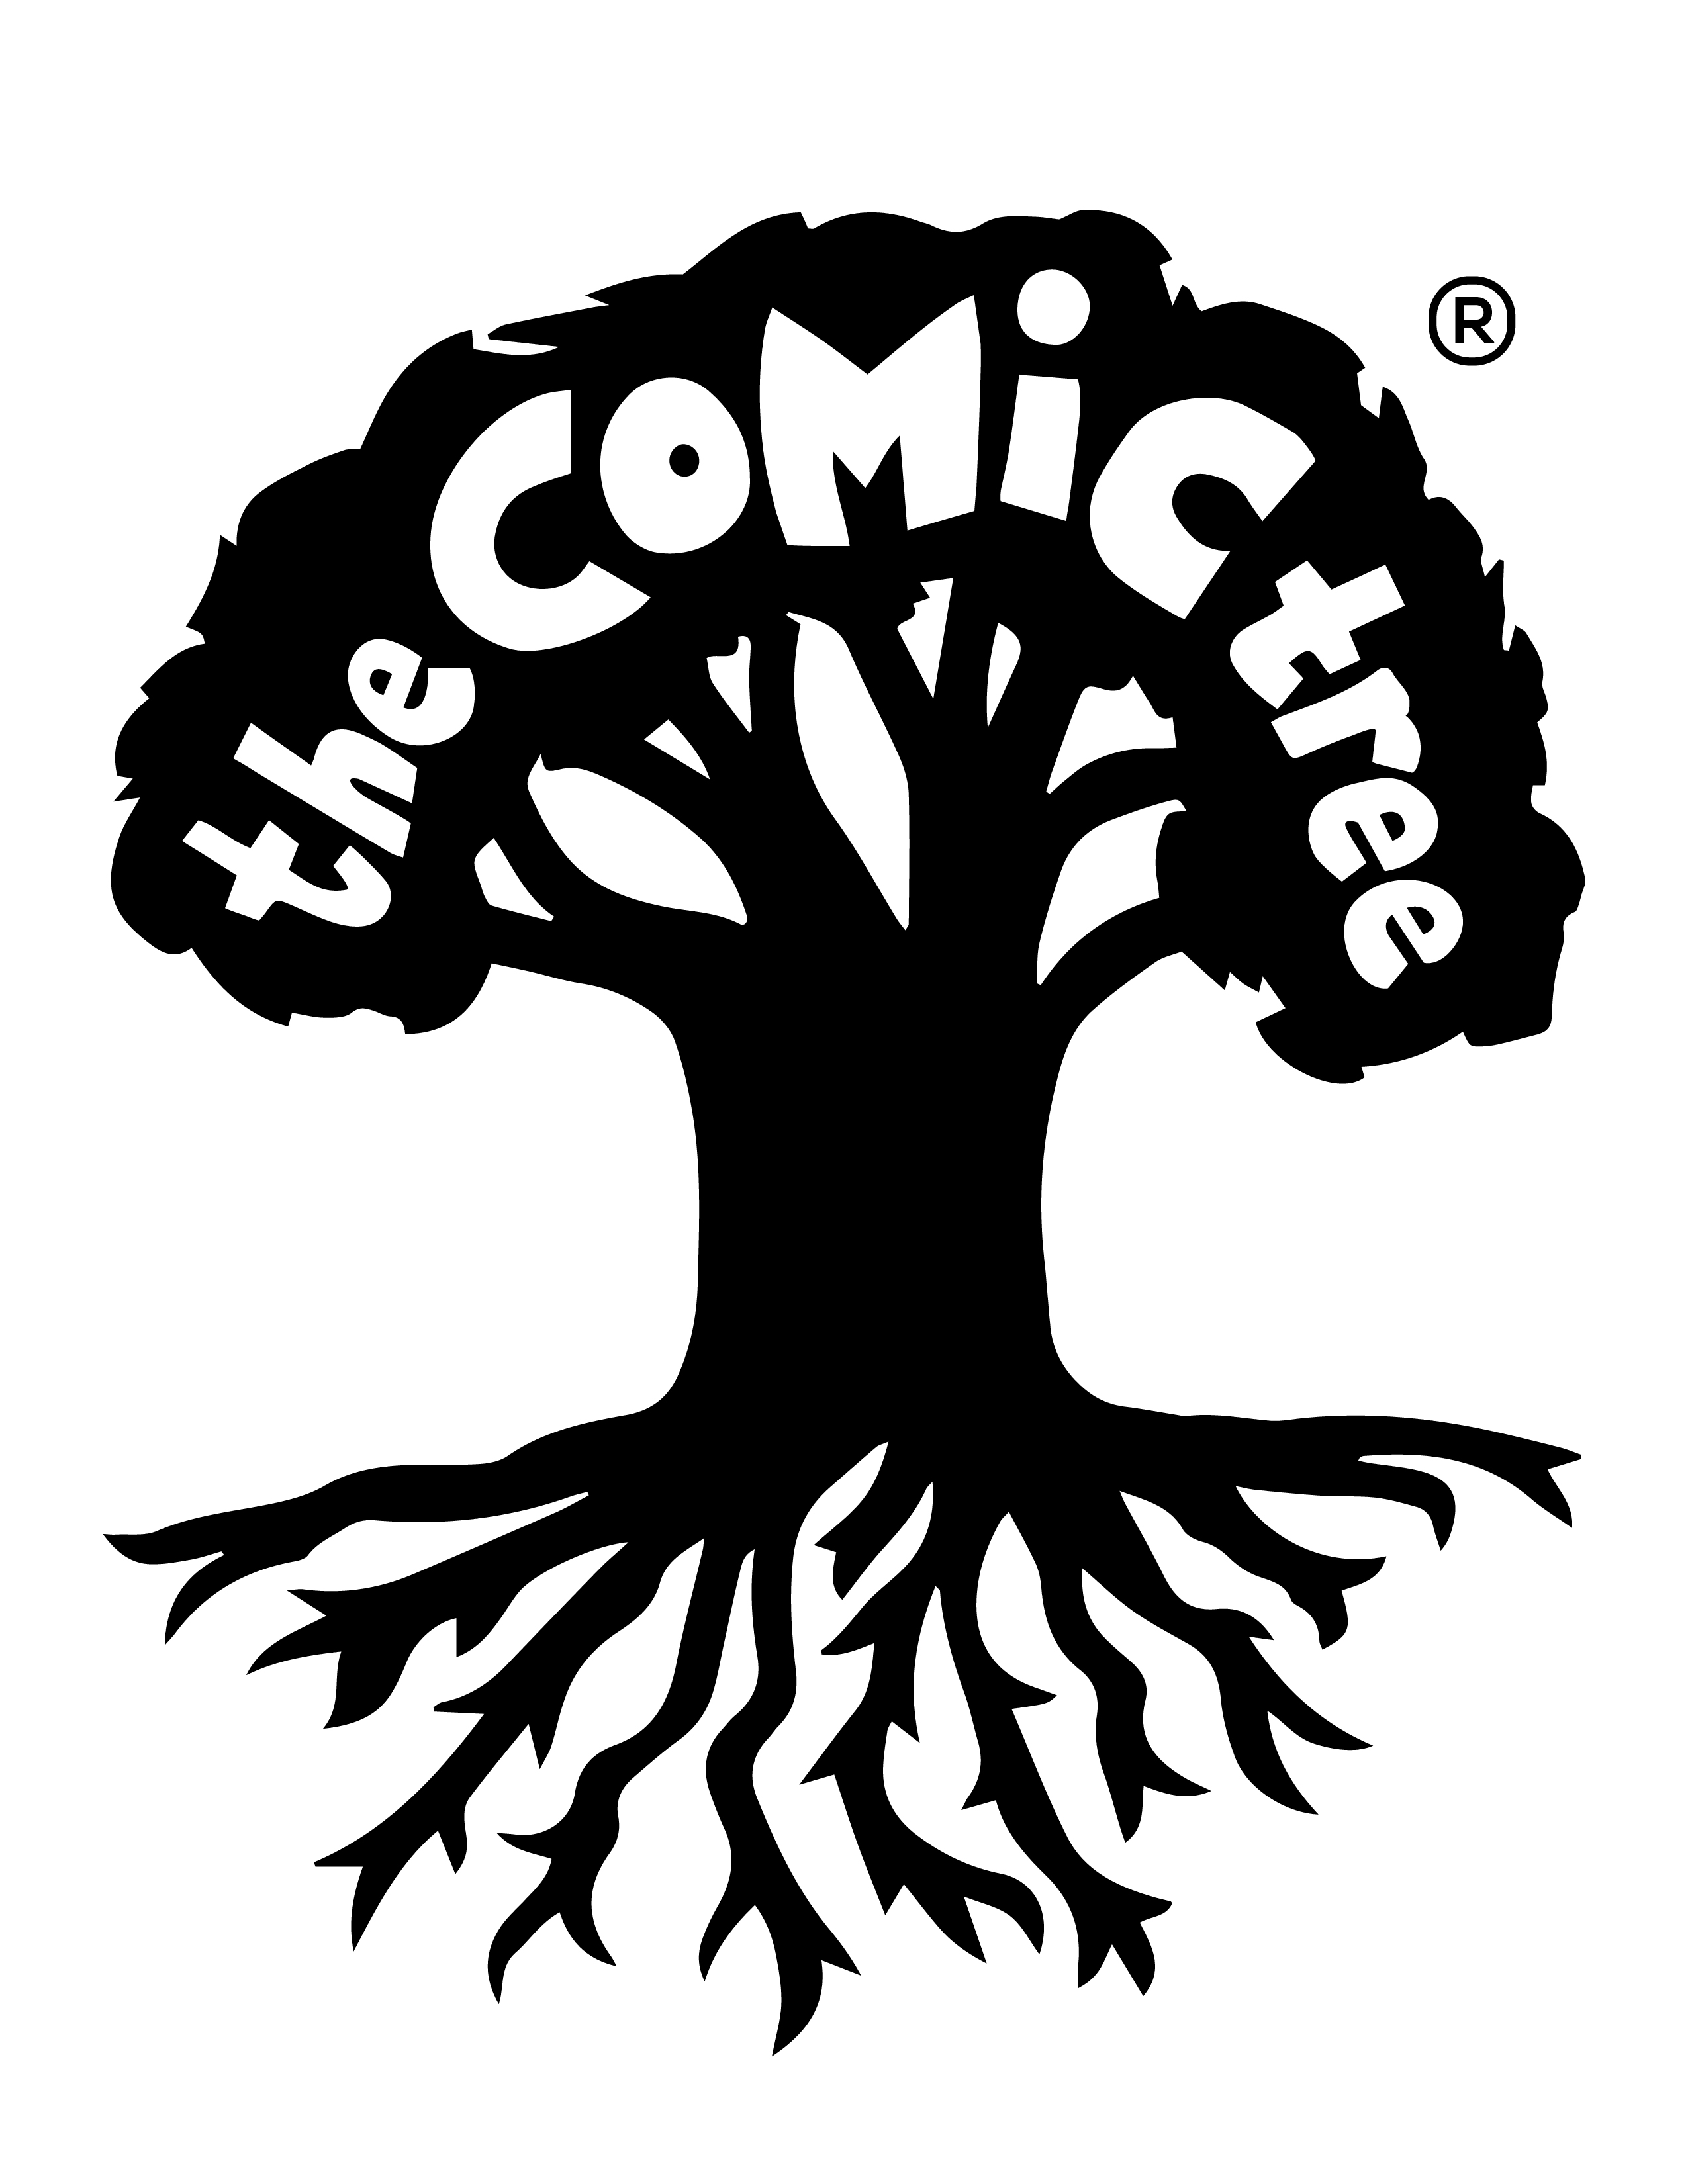 The Comic Tree